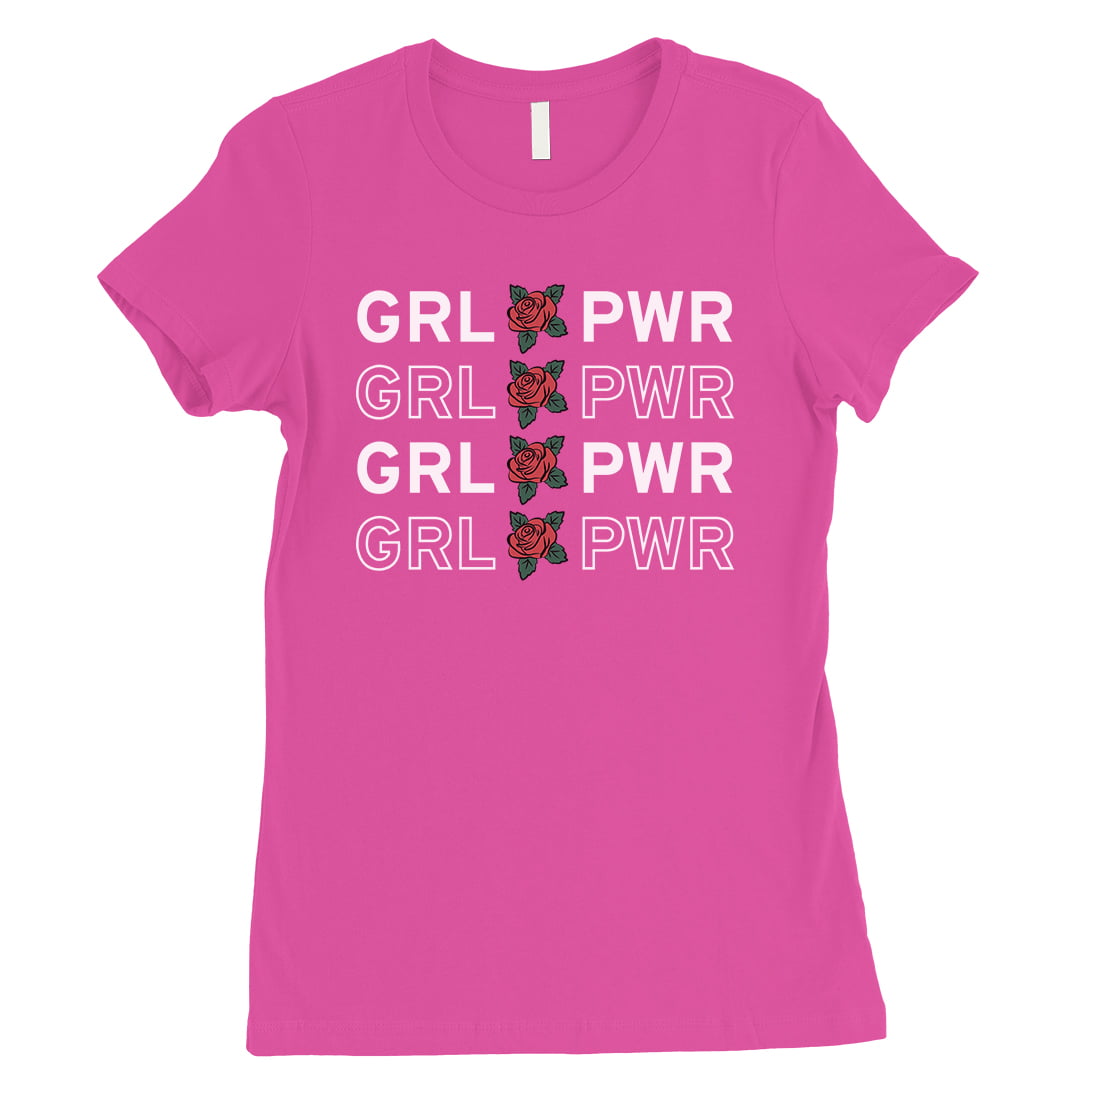 GRL PWR Shirt Female Empowerment Shirt Motivation Shirt Boss Babe Shirt Girl Power Shirt Motivation Quote Boxing Shirt